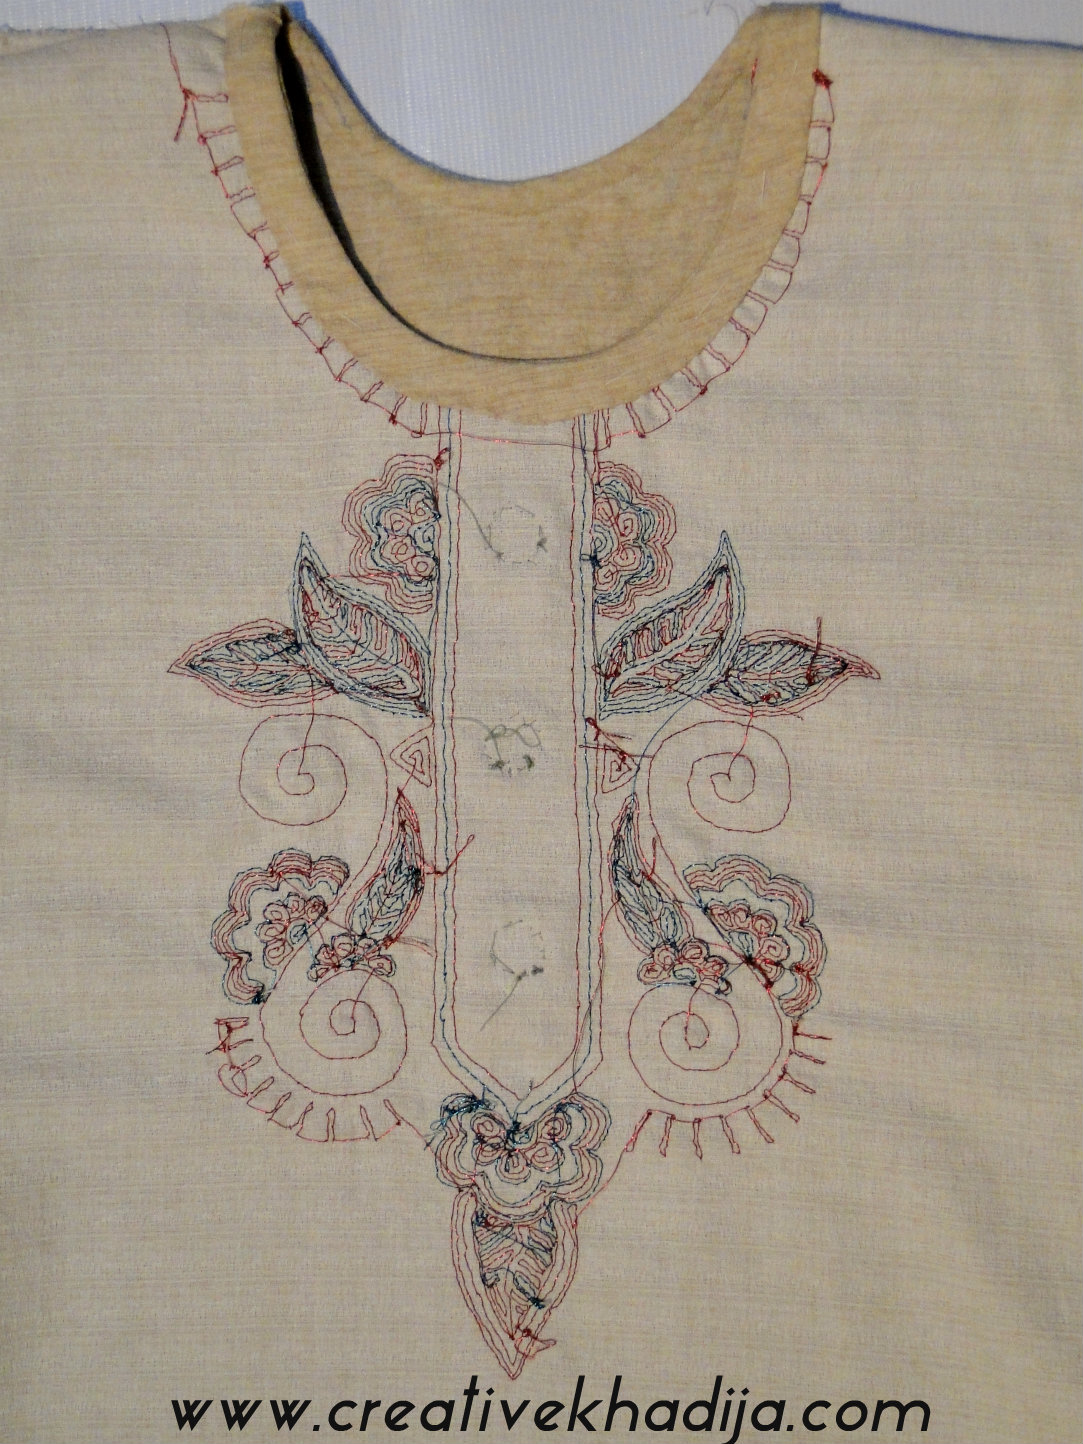 zardosi embroidery on shirt neckline tutorial 